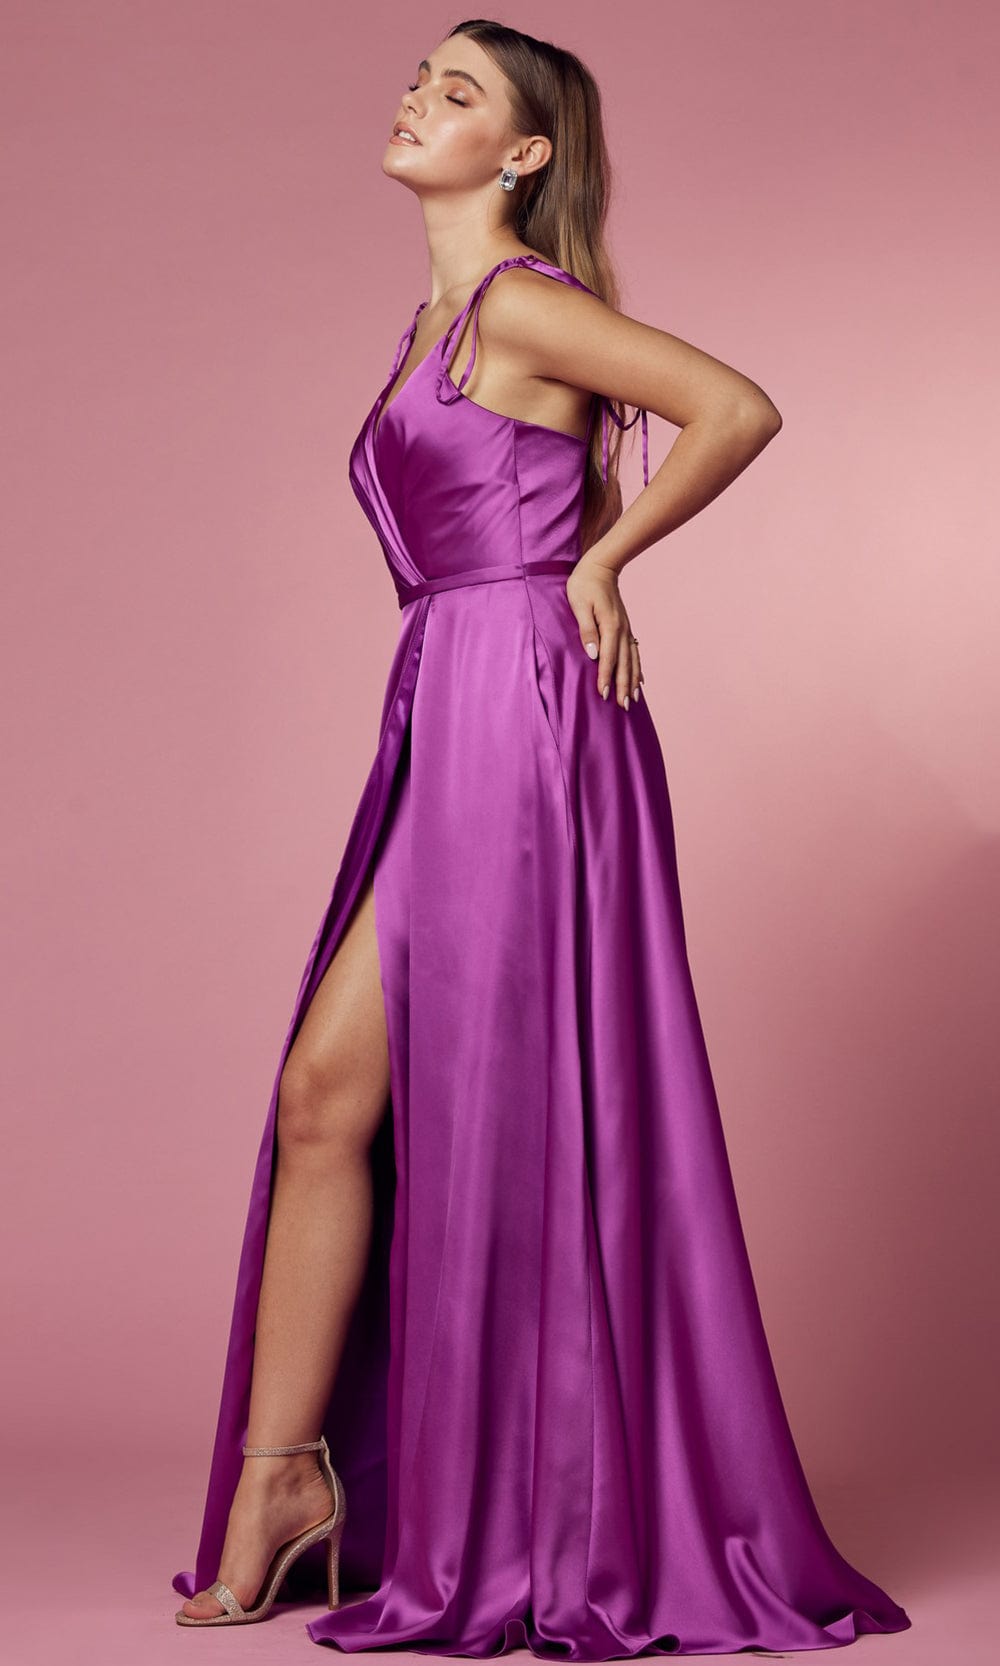 Nox Anabel R1029 - Tie Strap A-Line Prom Dress Prom Dresses